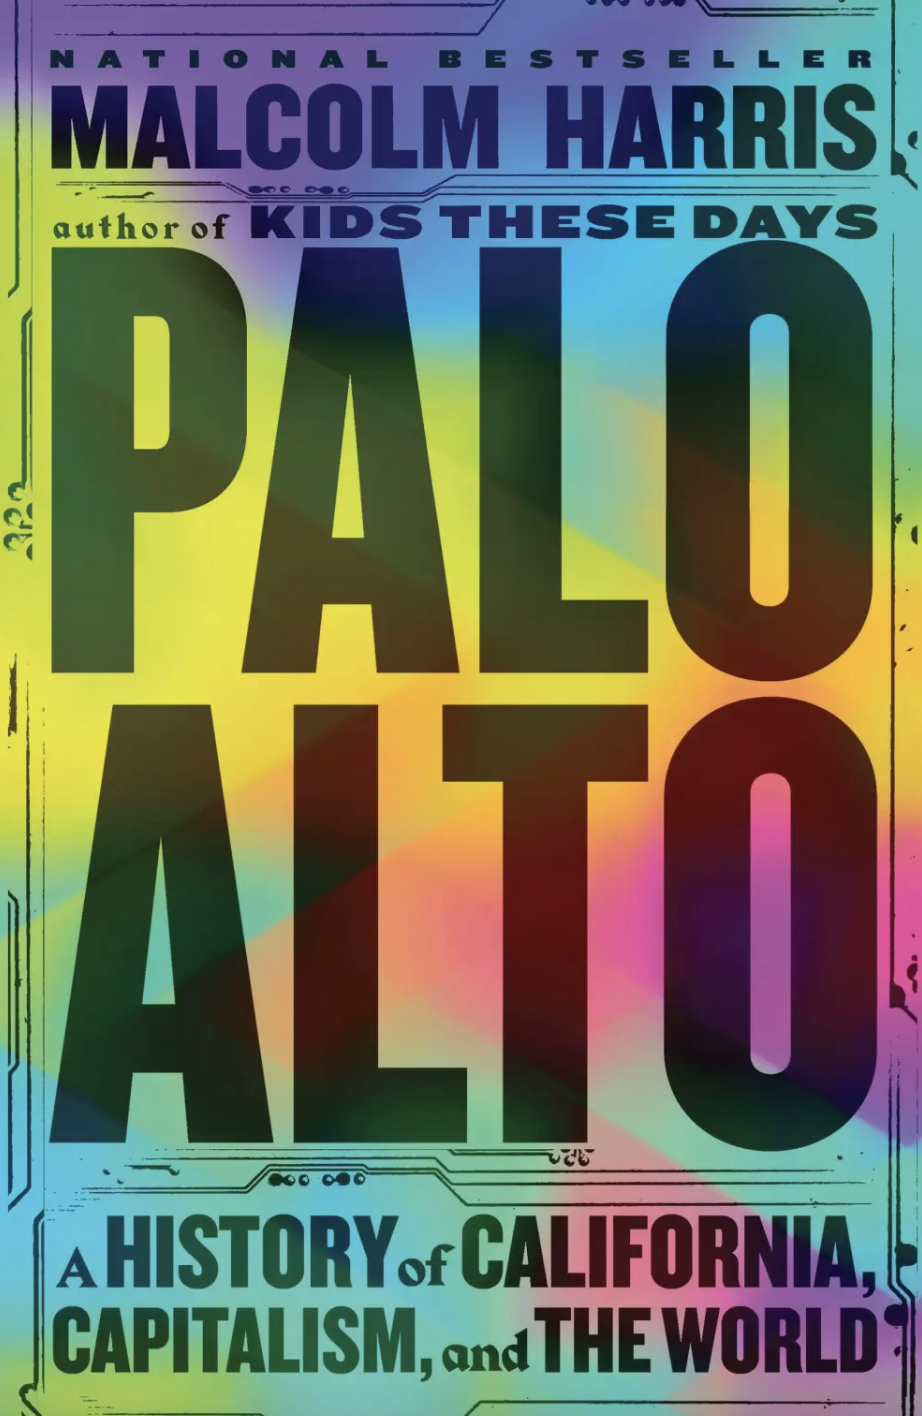 A rainbow colored cover for Malcolm Harris' "Palo Alto."